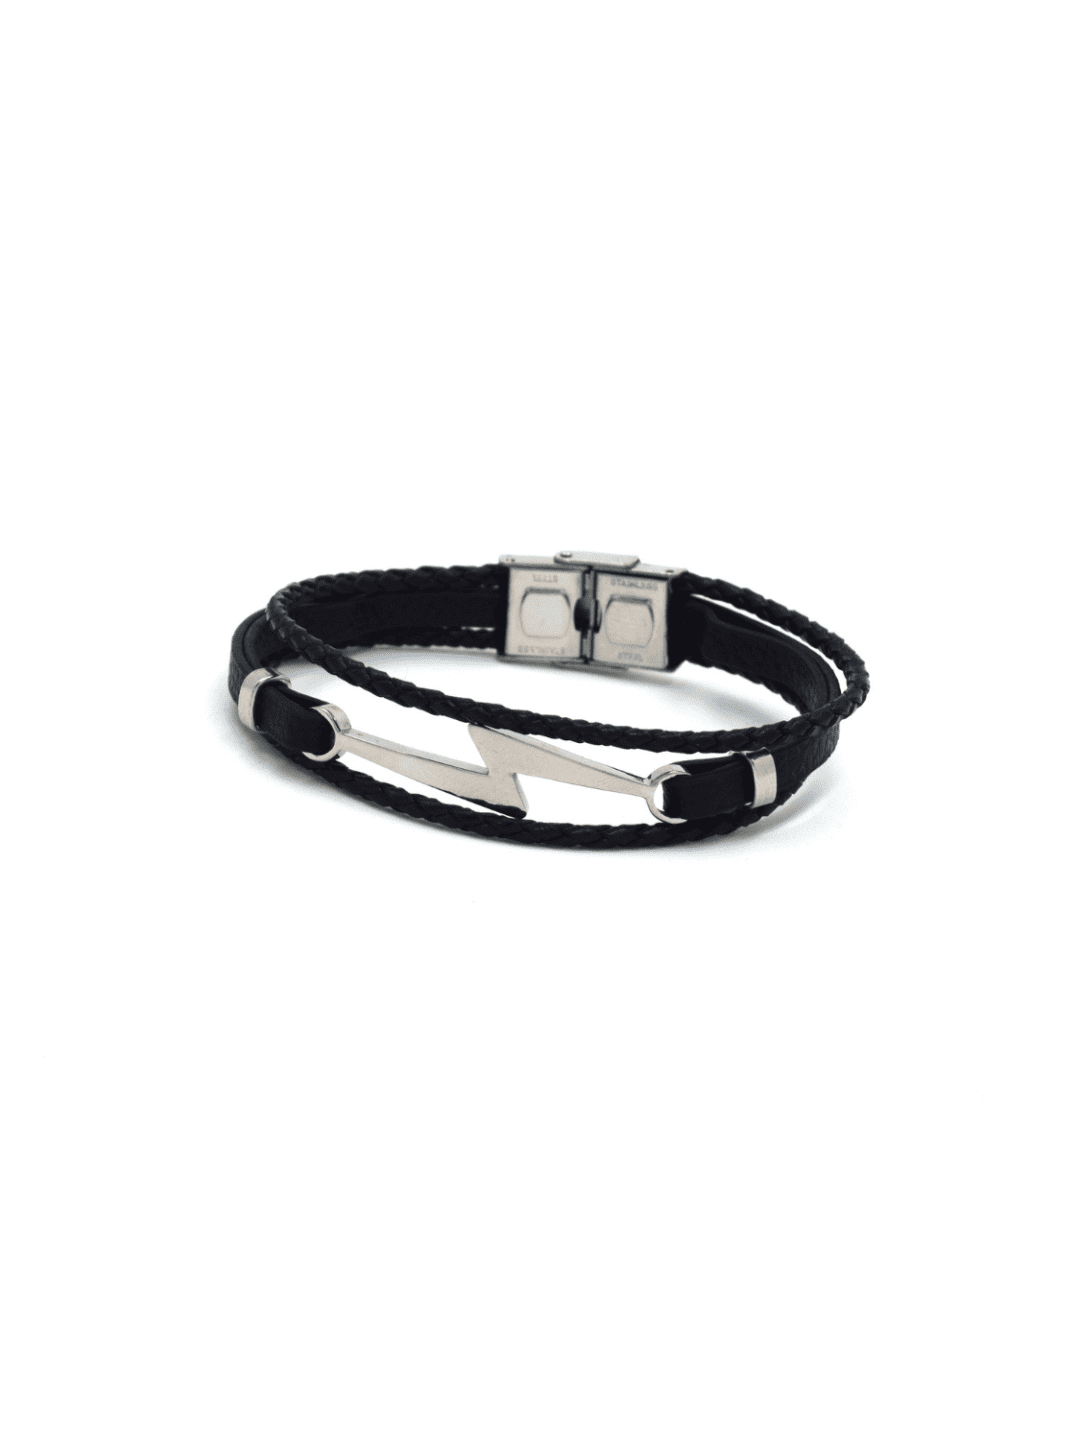 Alvaro Castagnino Black Leather Wraparound Handcrafted Bracelet